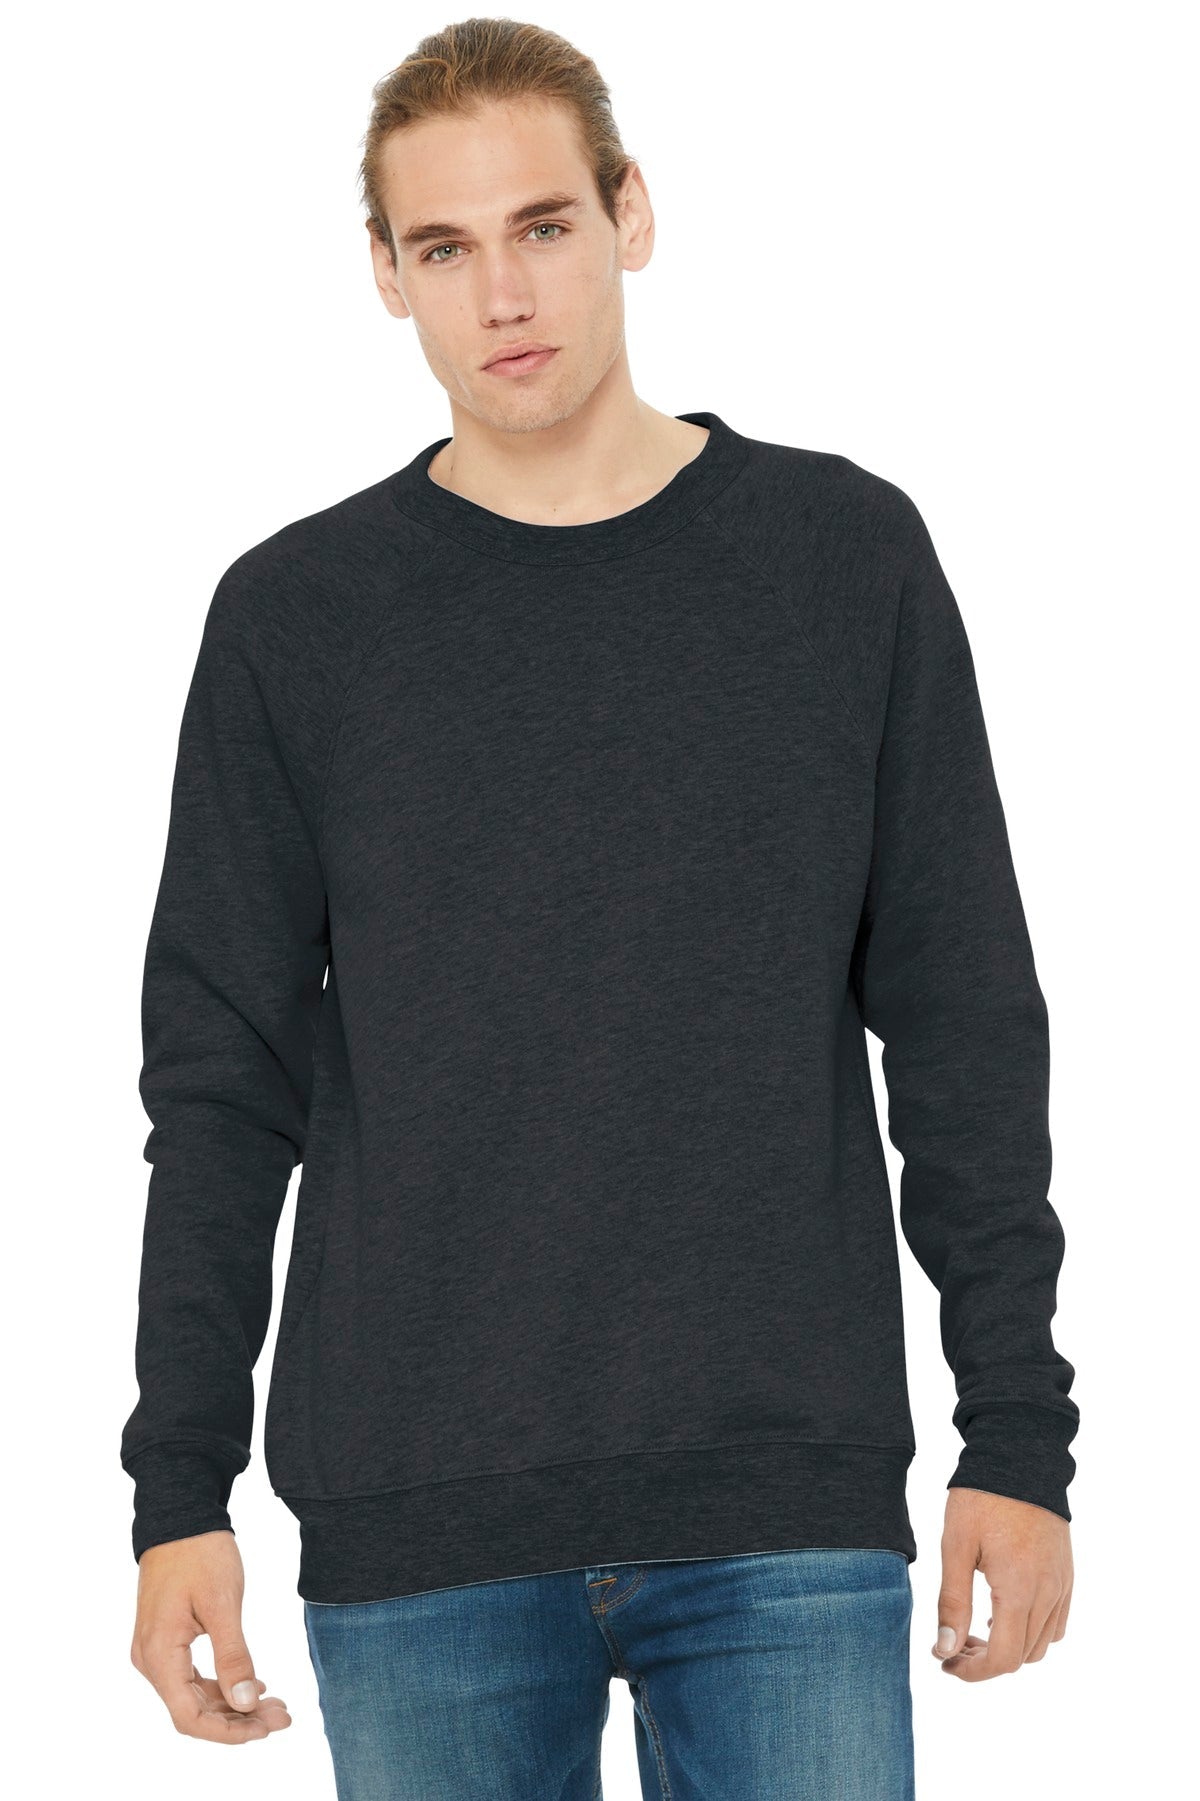 BELLA+CANVAS ® Unisex Sponge Fleece Raglan Sweatshirt. BC3901 - DFW Impression